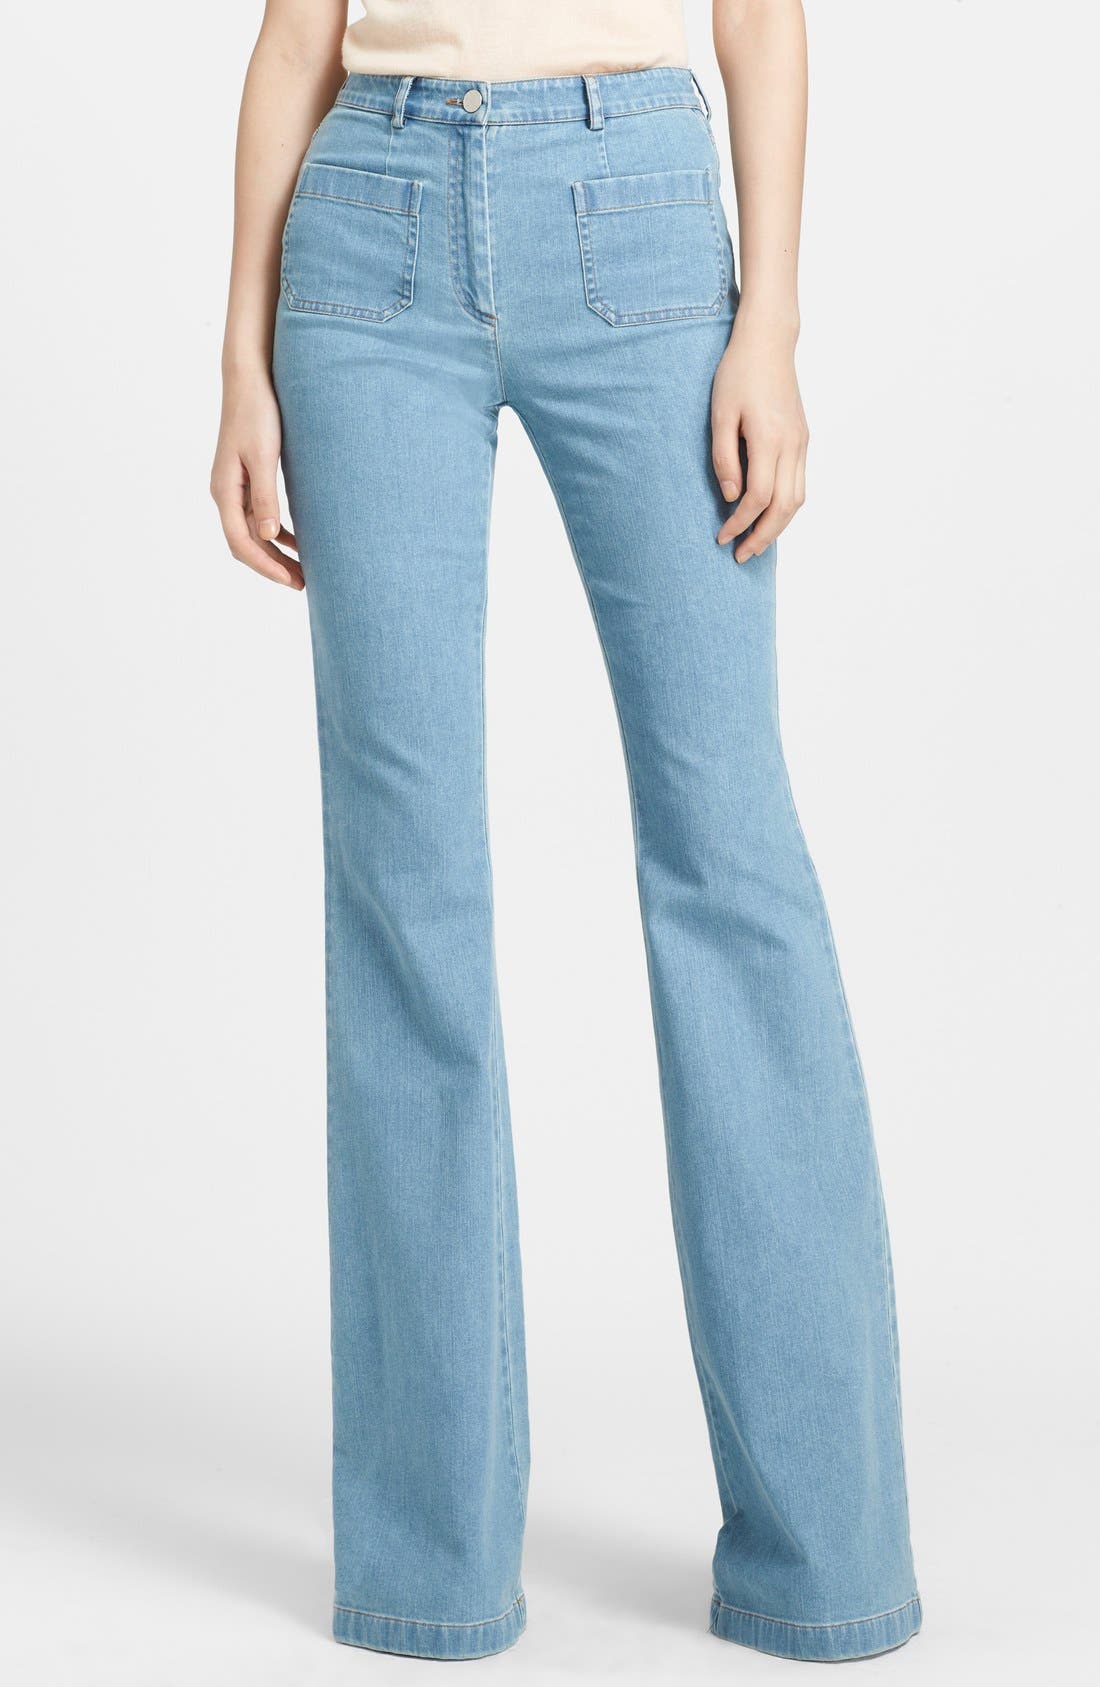 Michael Kors Bell Bottom Stretch Jeans 